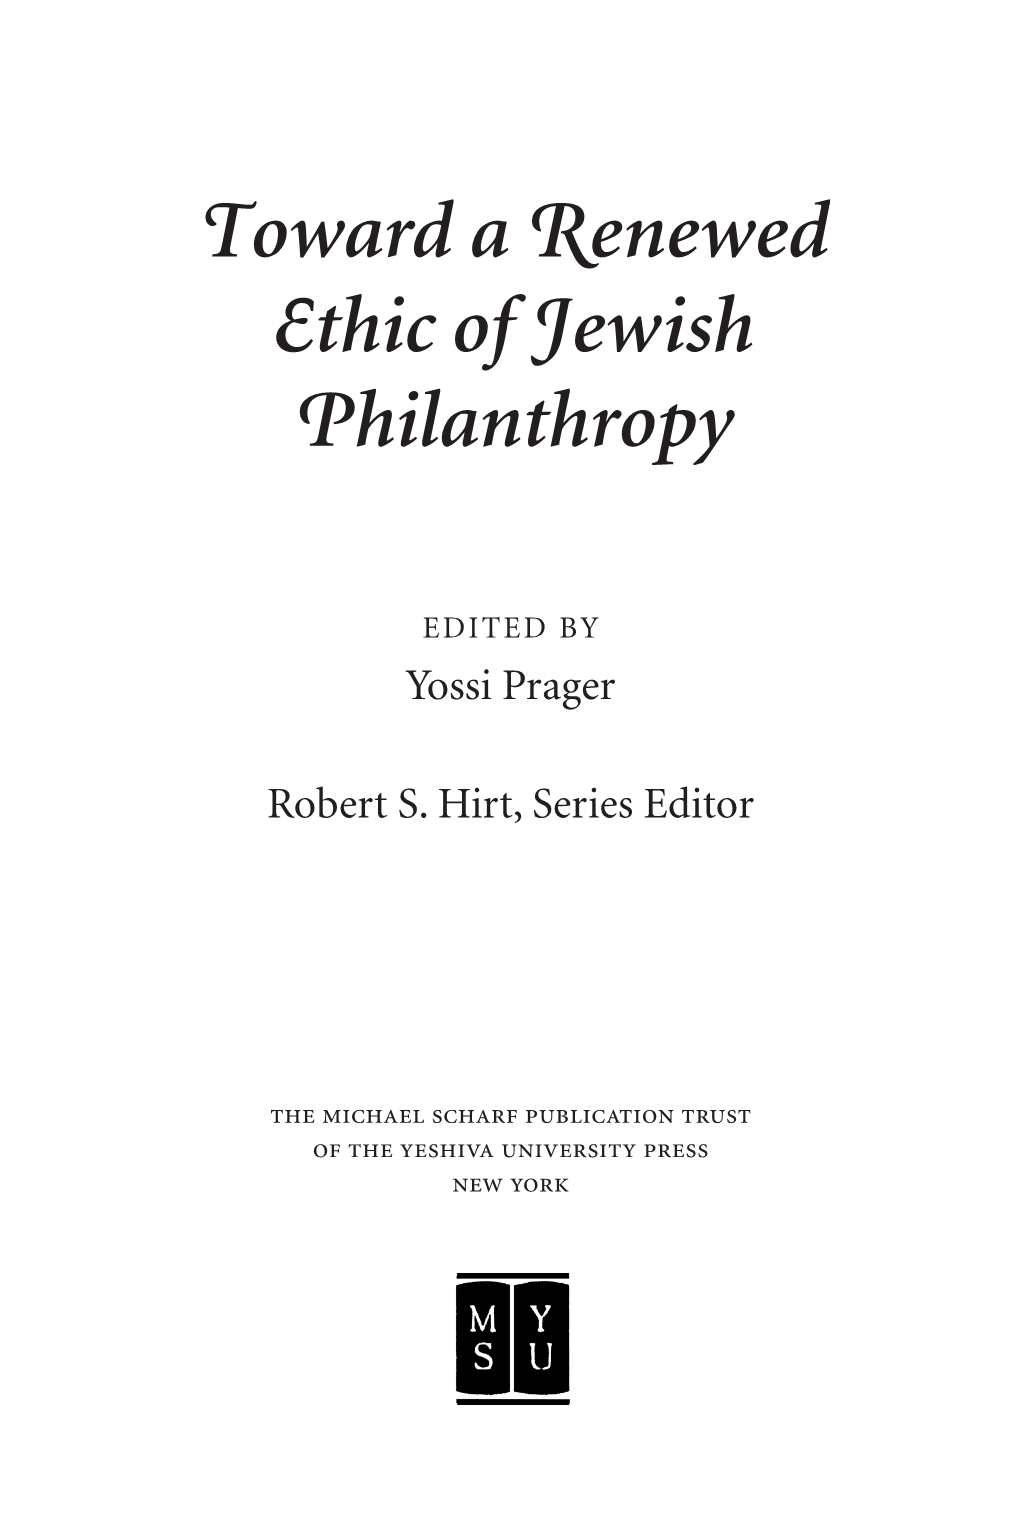 Toward a Renewed Ethic of Jewish Philanthropy